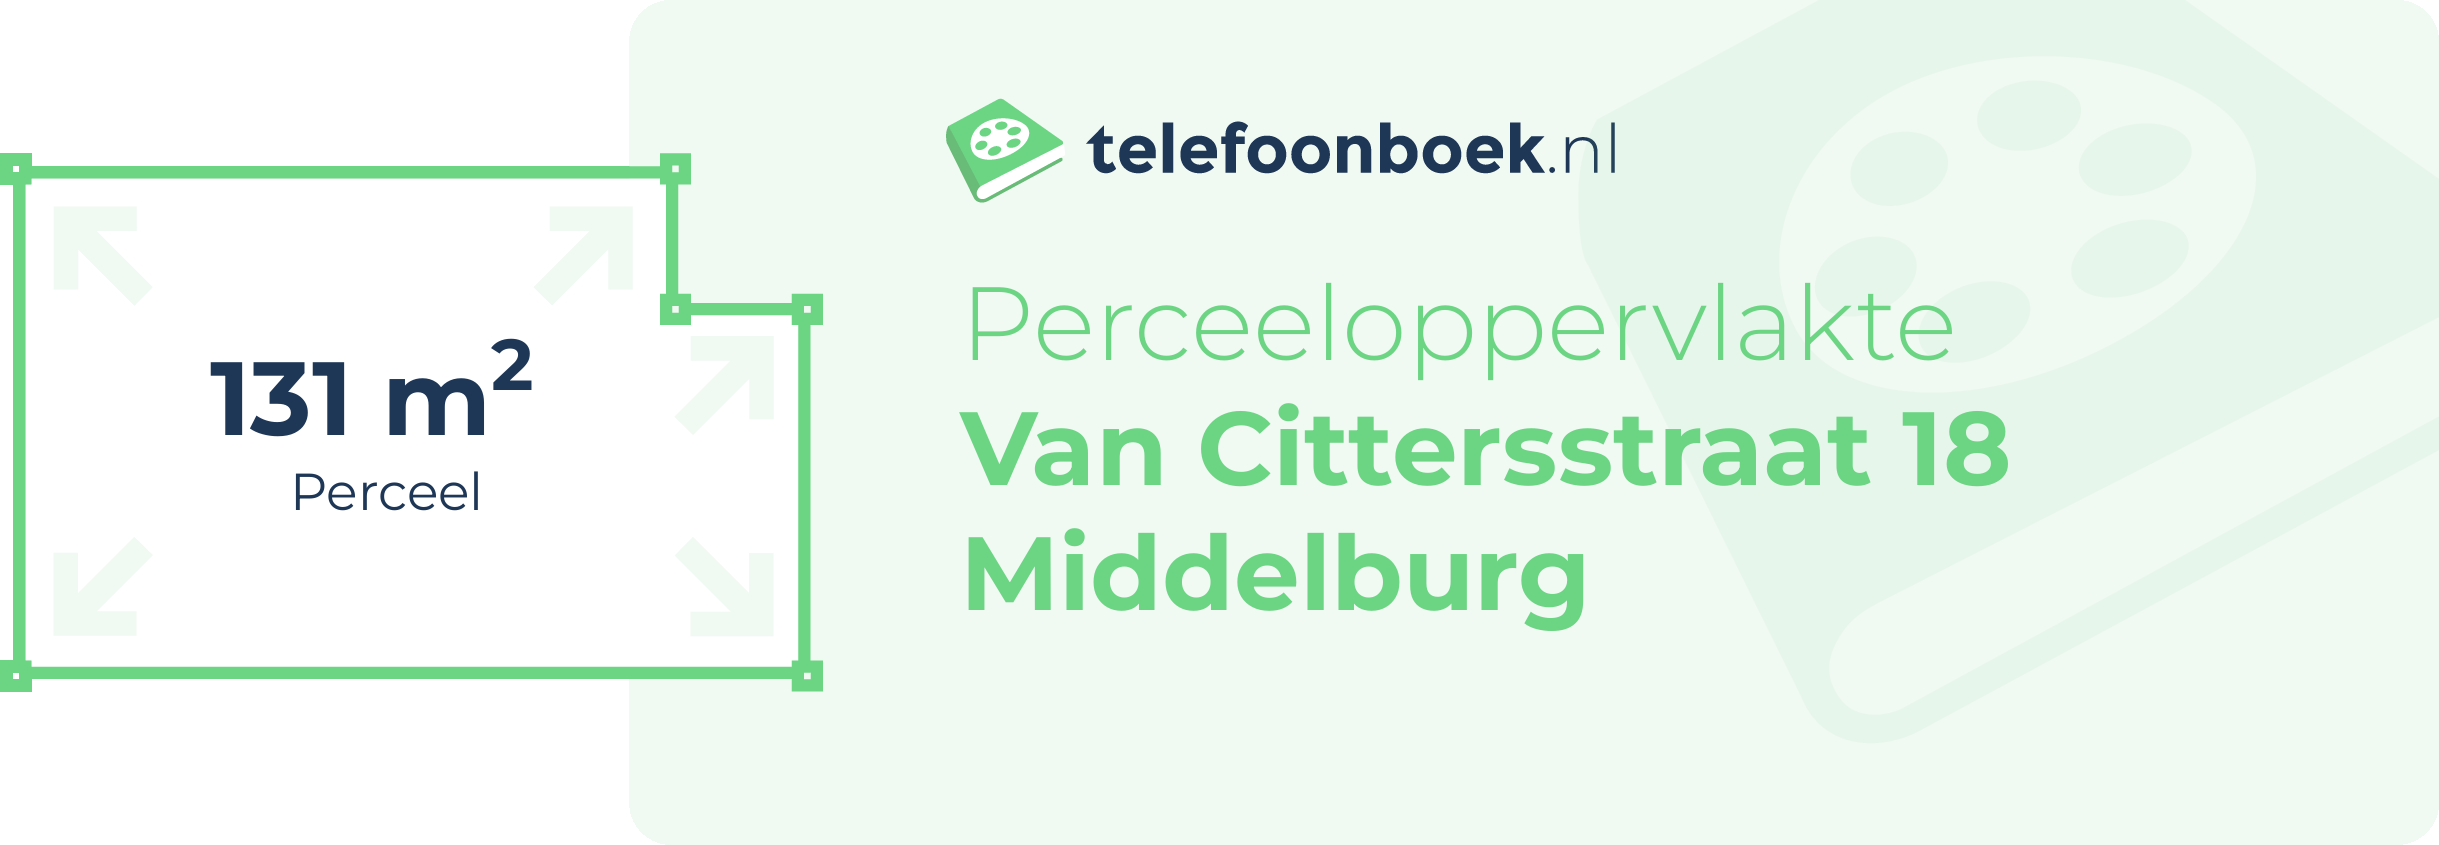 Perceeloppervlakte Van Cittersstraat 18 Middelburg